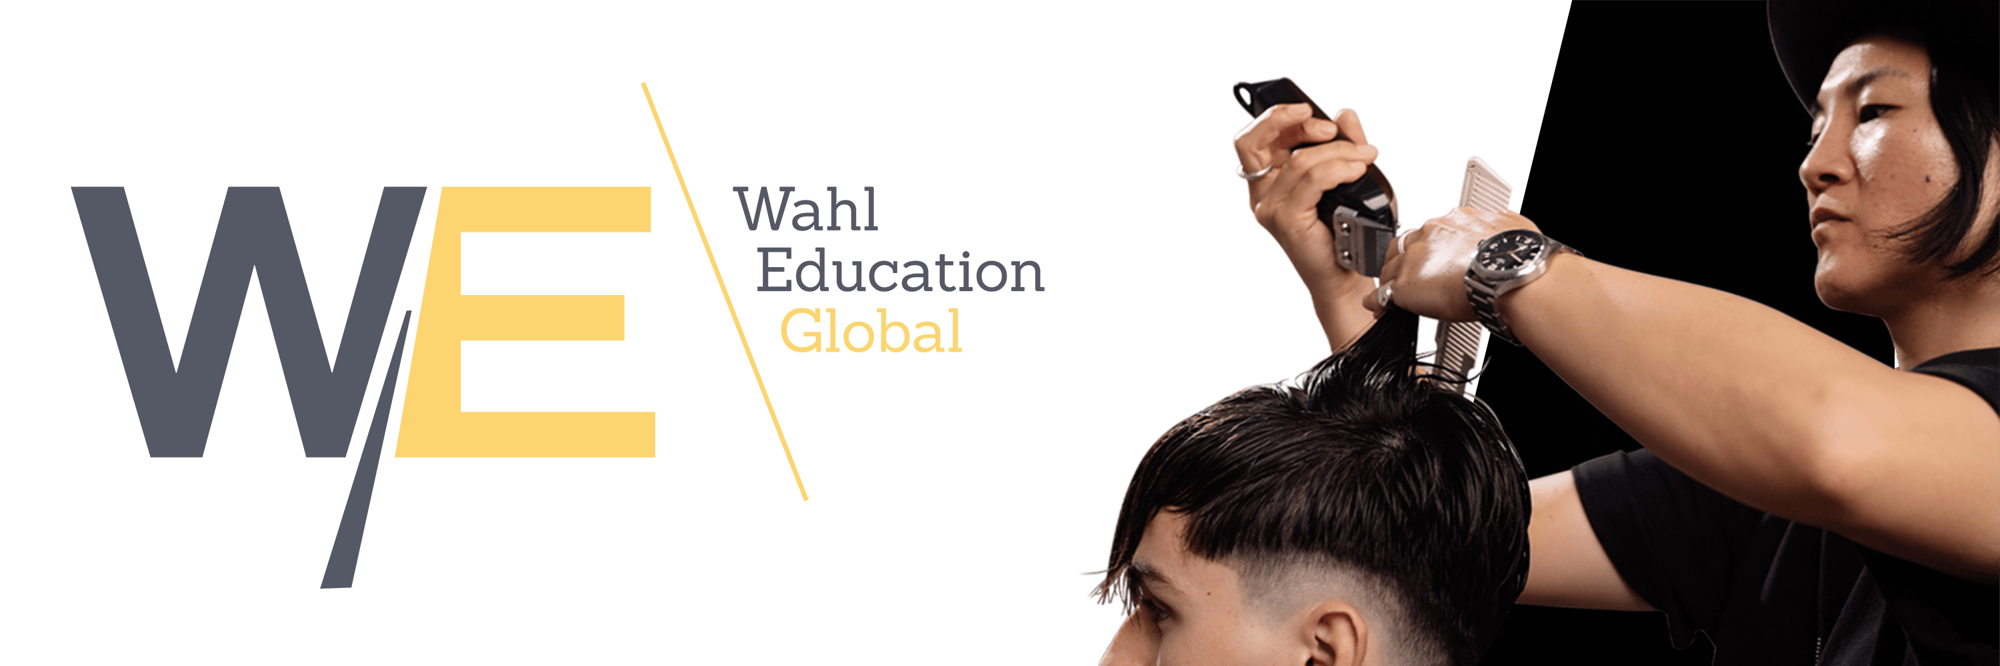 wahl-education-global-banner